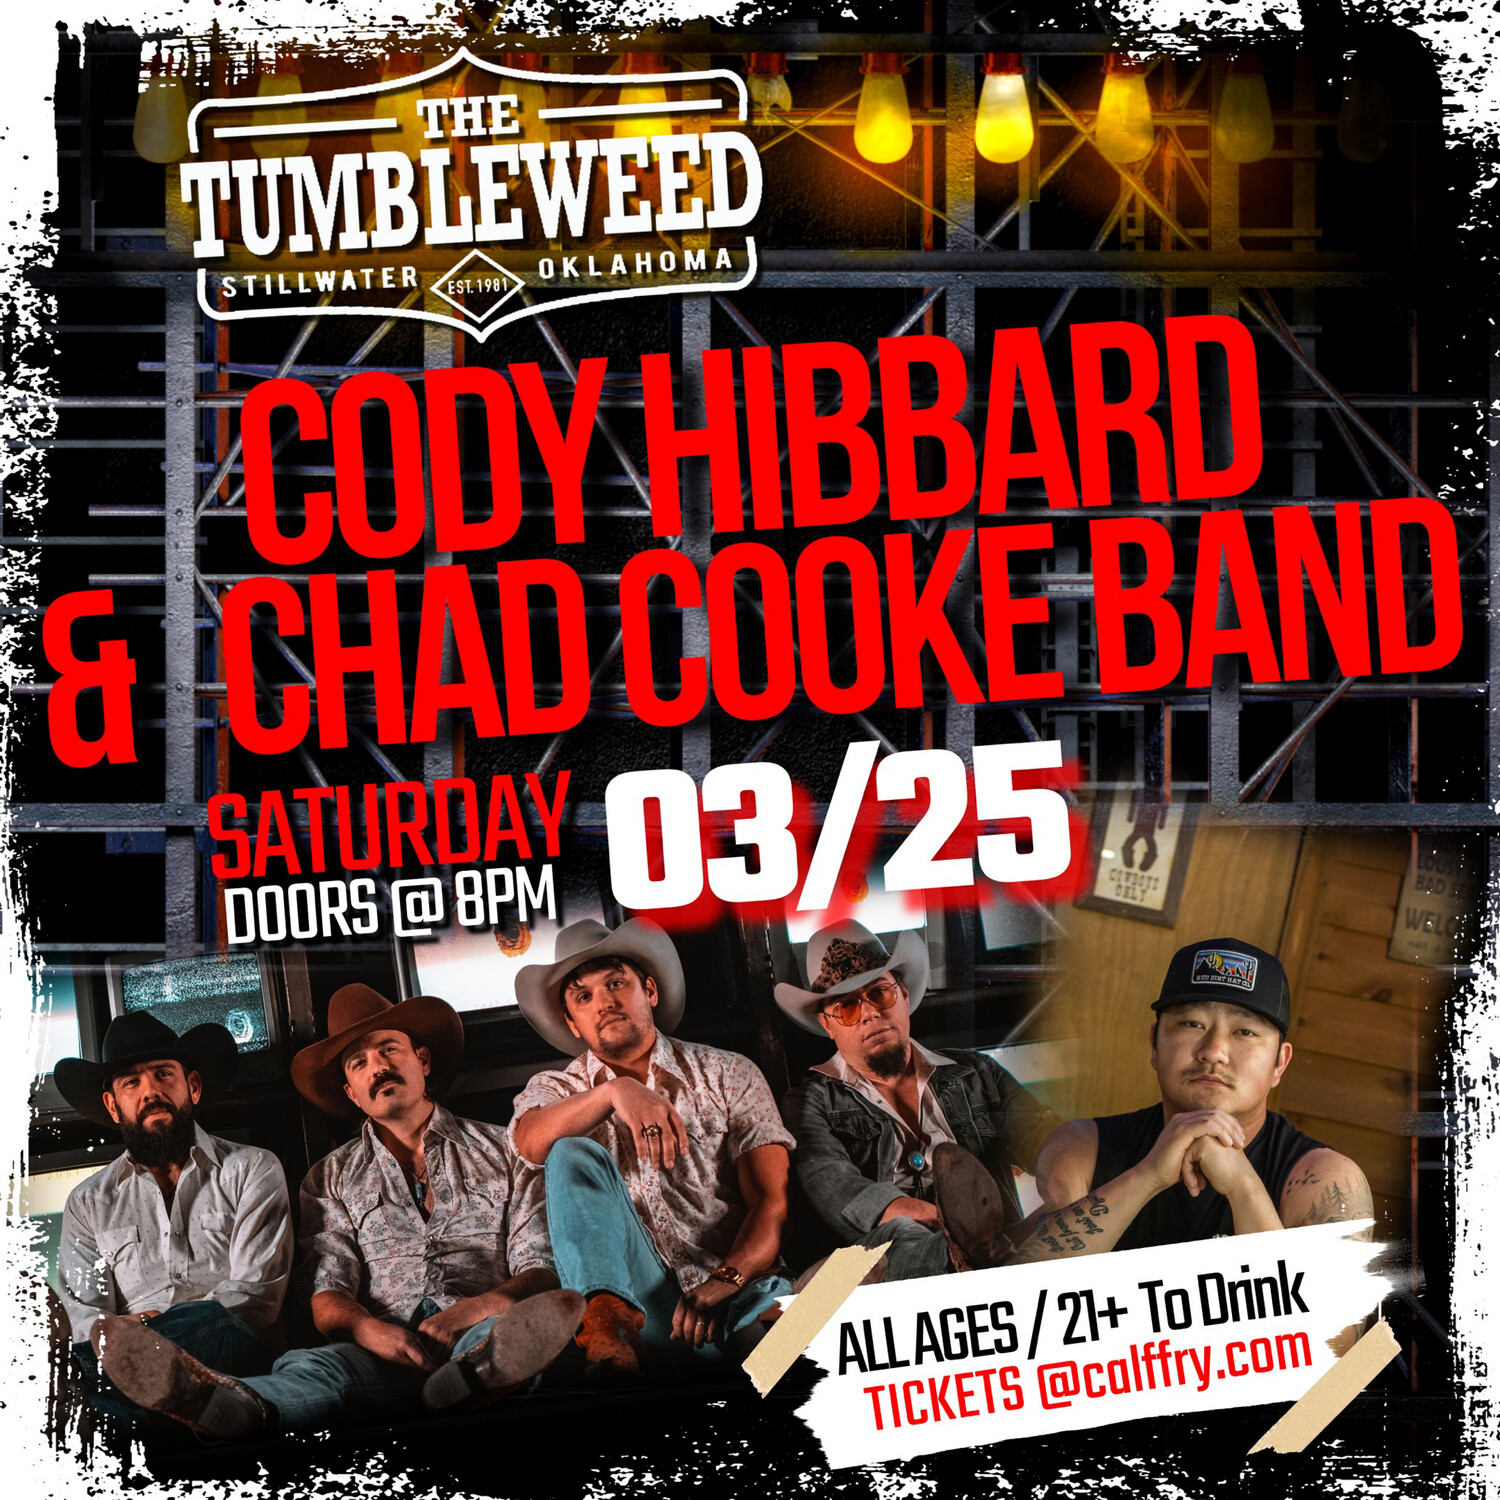 Cody Hibbard & Chad Cooke Band Saturday March 25 DOS